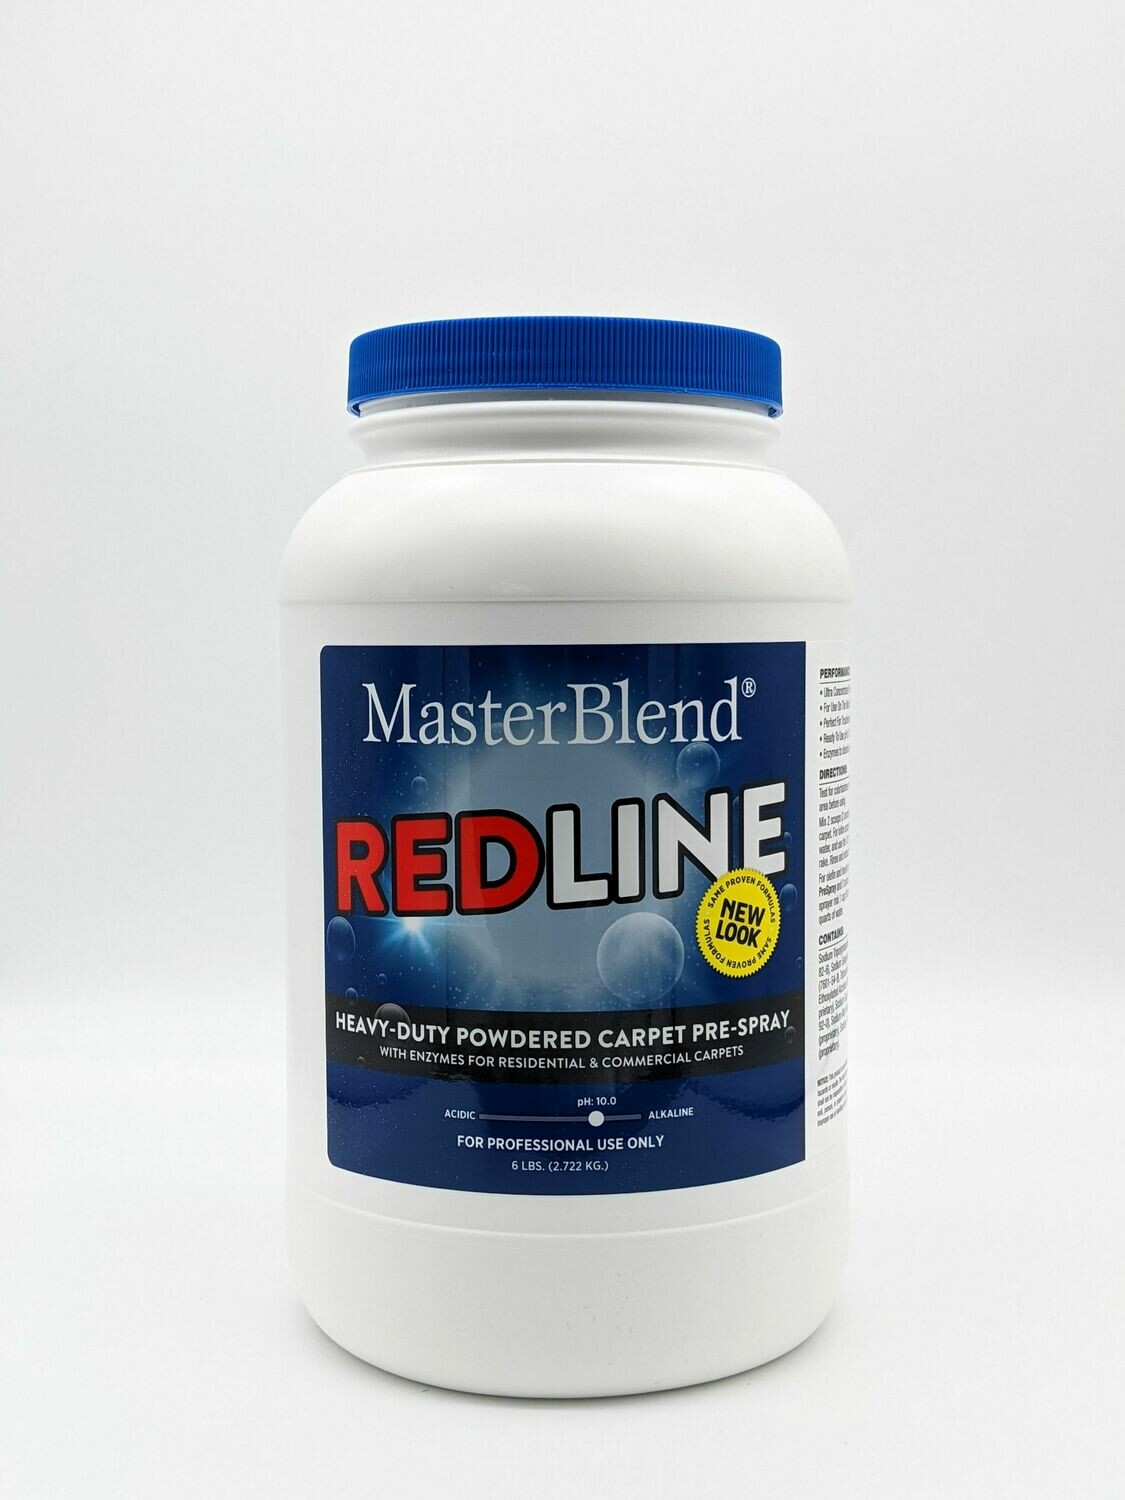 MasterBlend Redline Powder Prespray (6lbs.)